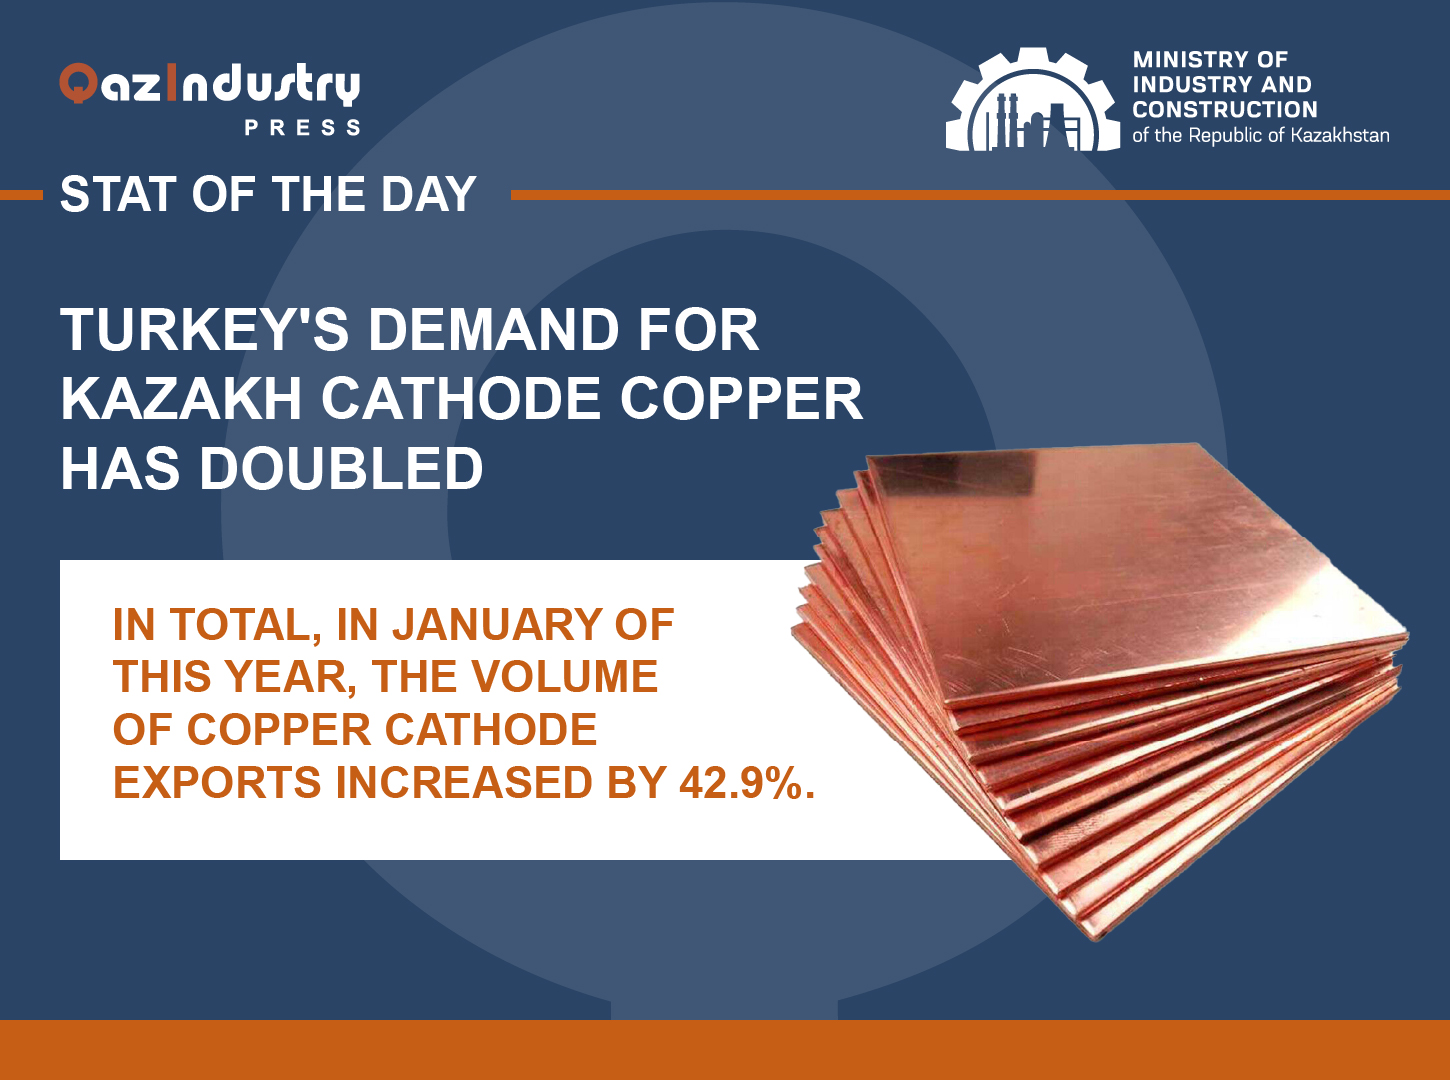 Turkey's demand for Kazakh cathode copper has doubled